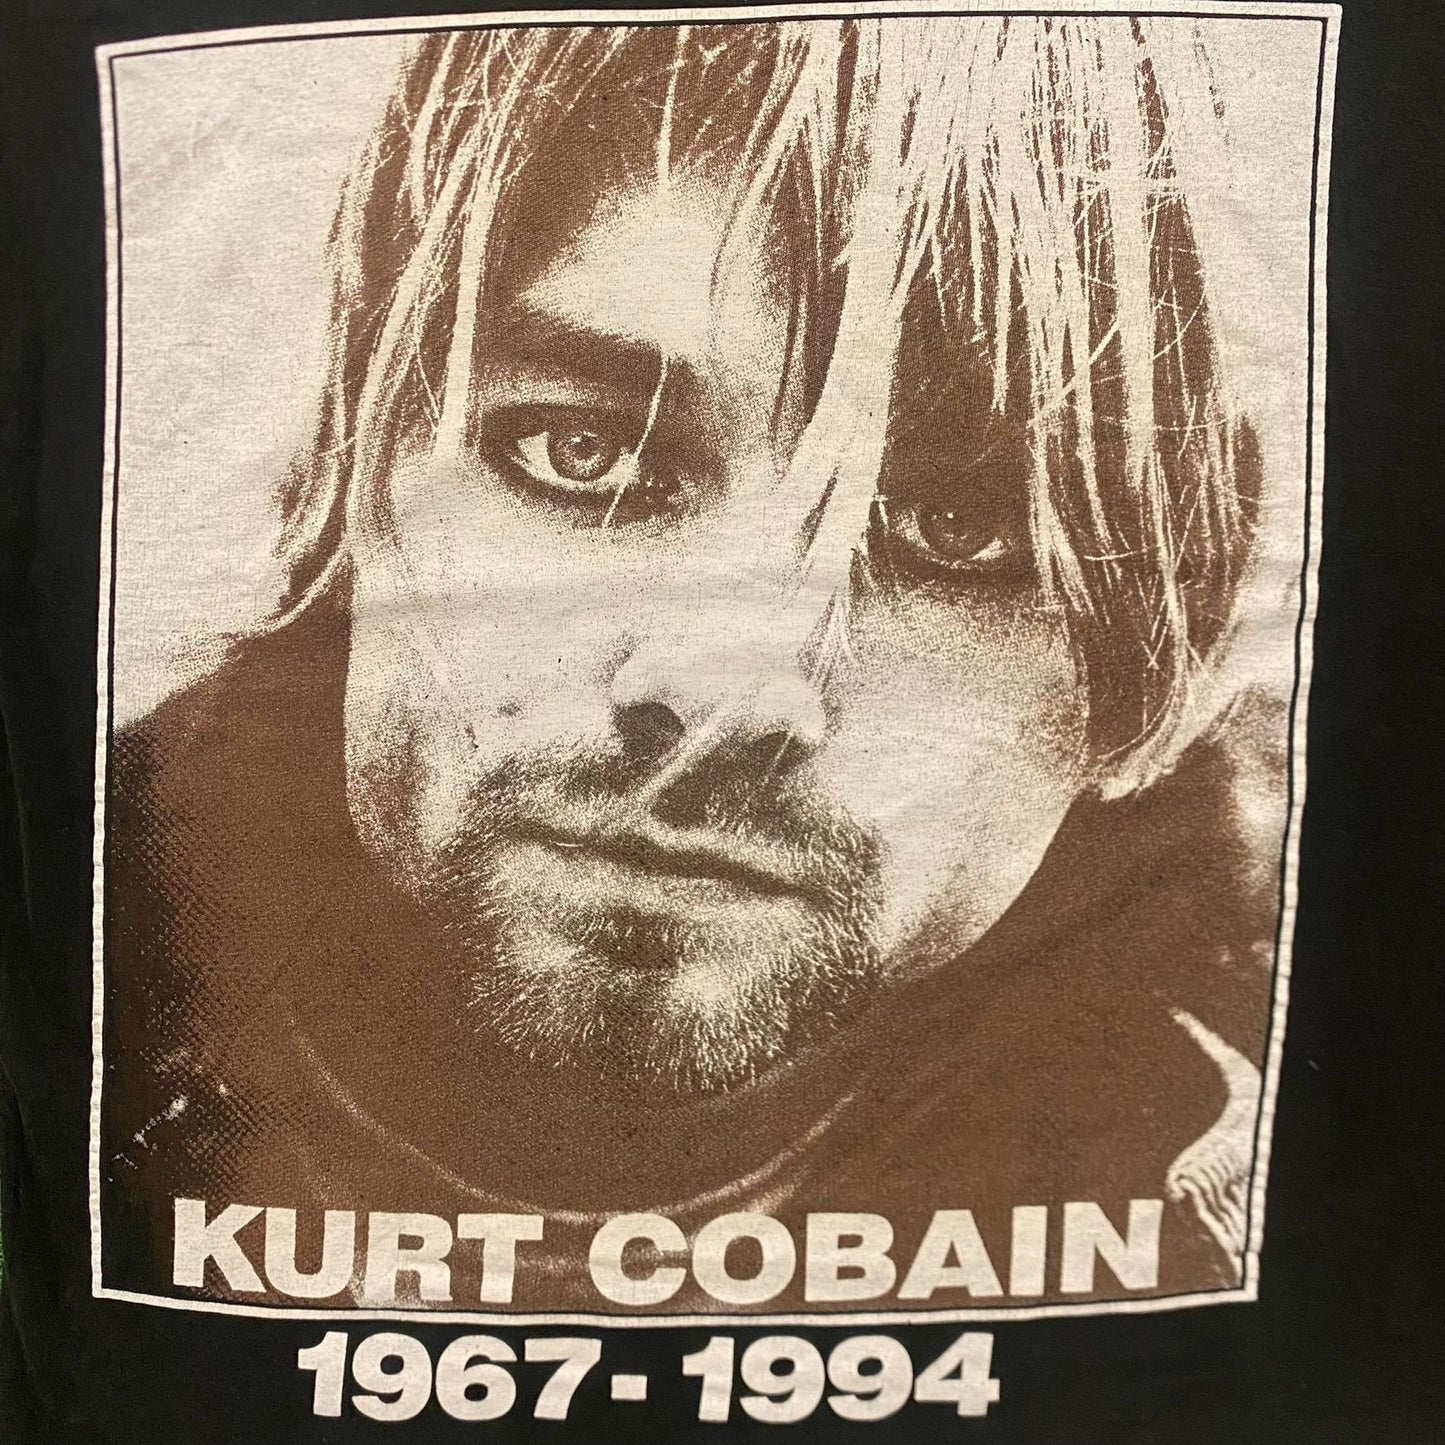 Vintage 90s Nirvana Kurt Cobain Memorial Grunge Band Tee